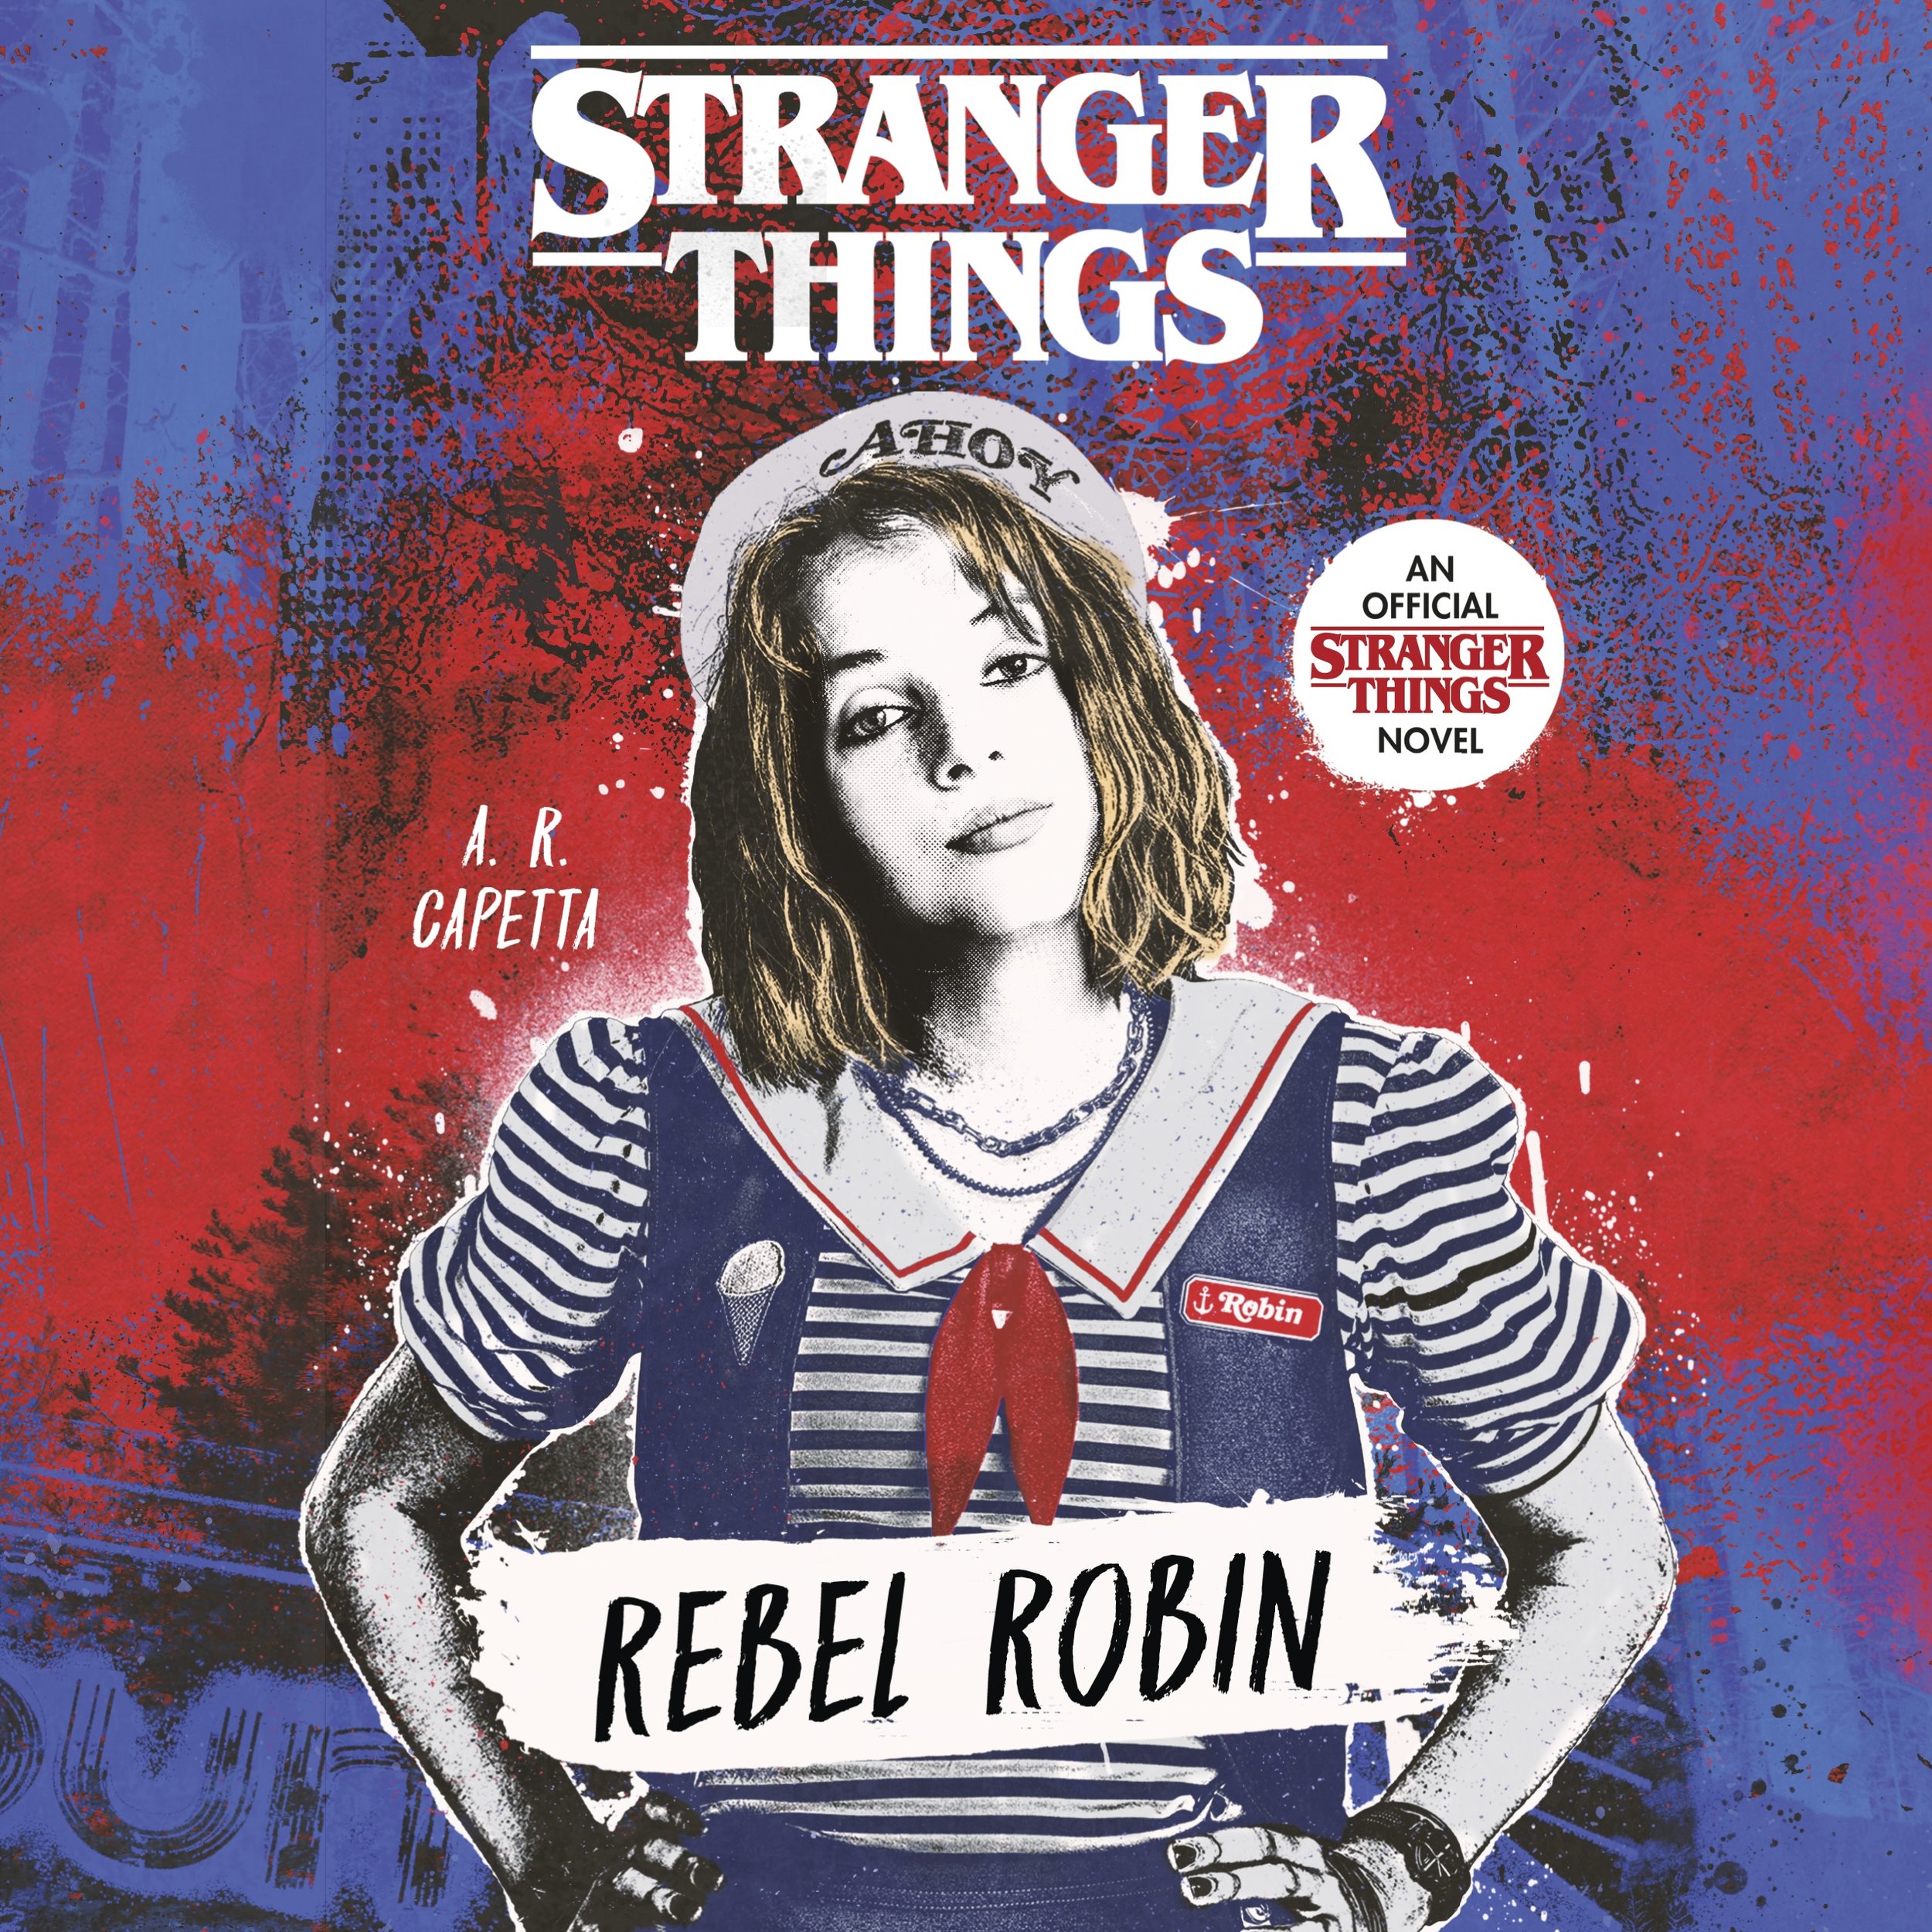 Stranger Things: Rebel Robin by A.R. Capetta